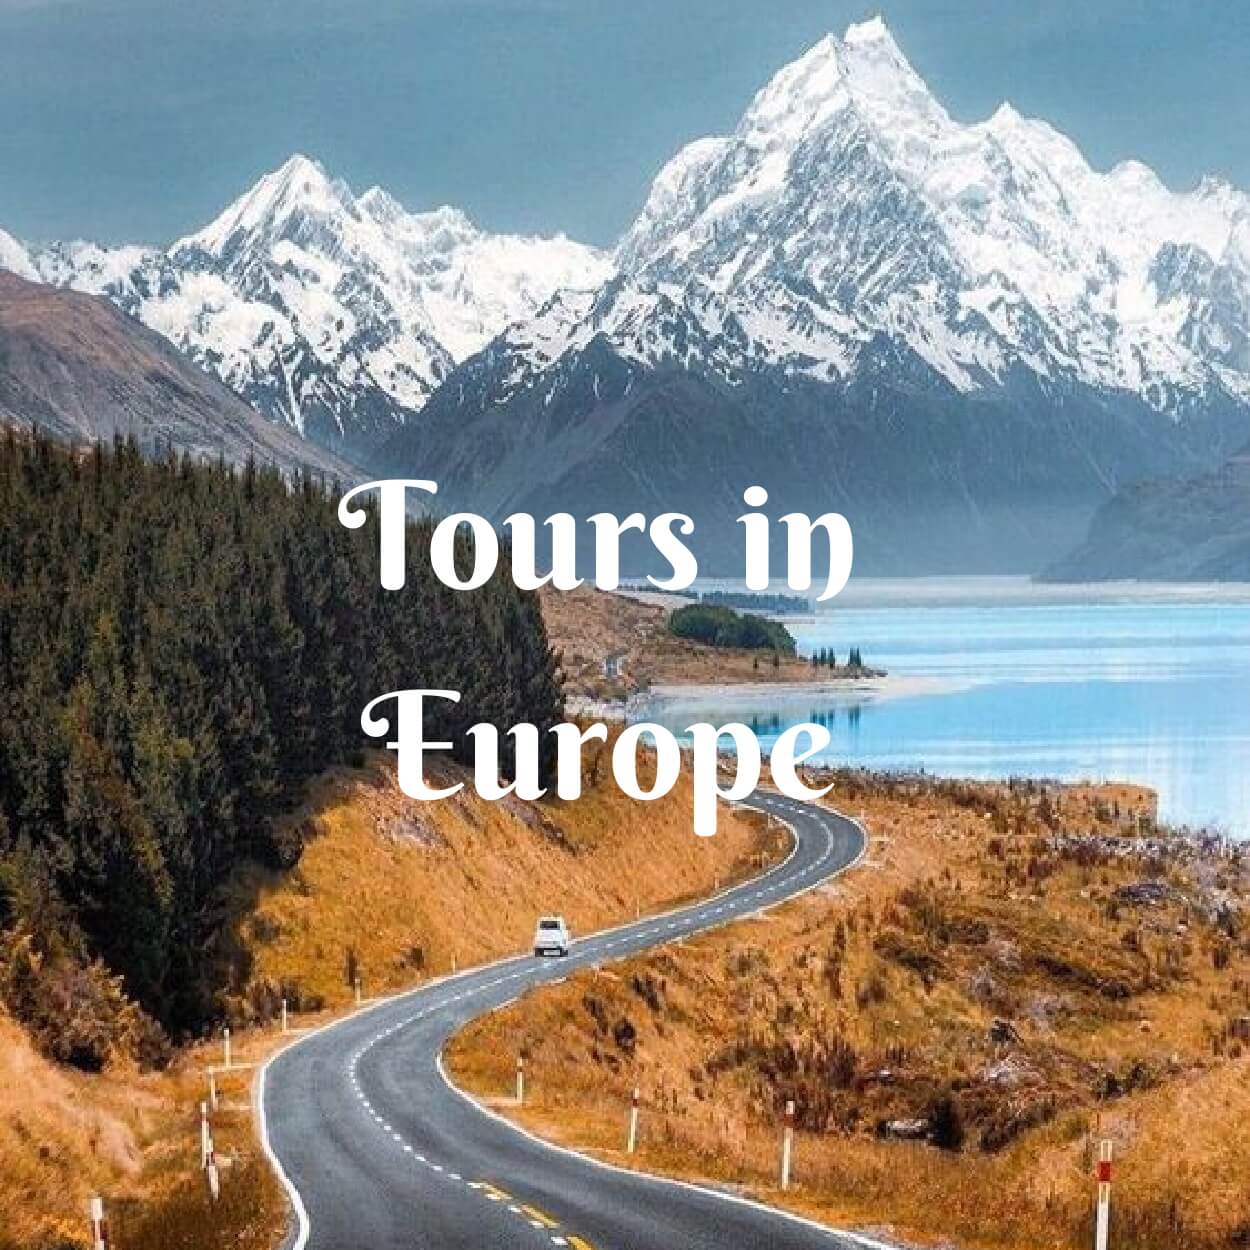 Worldwide Adventure Tours to Europe